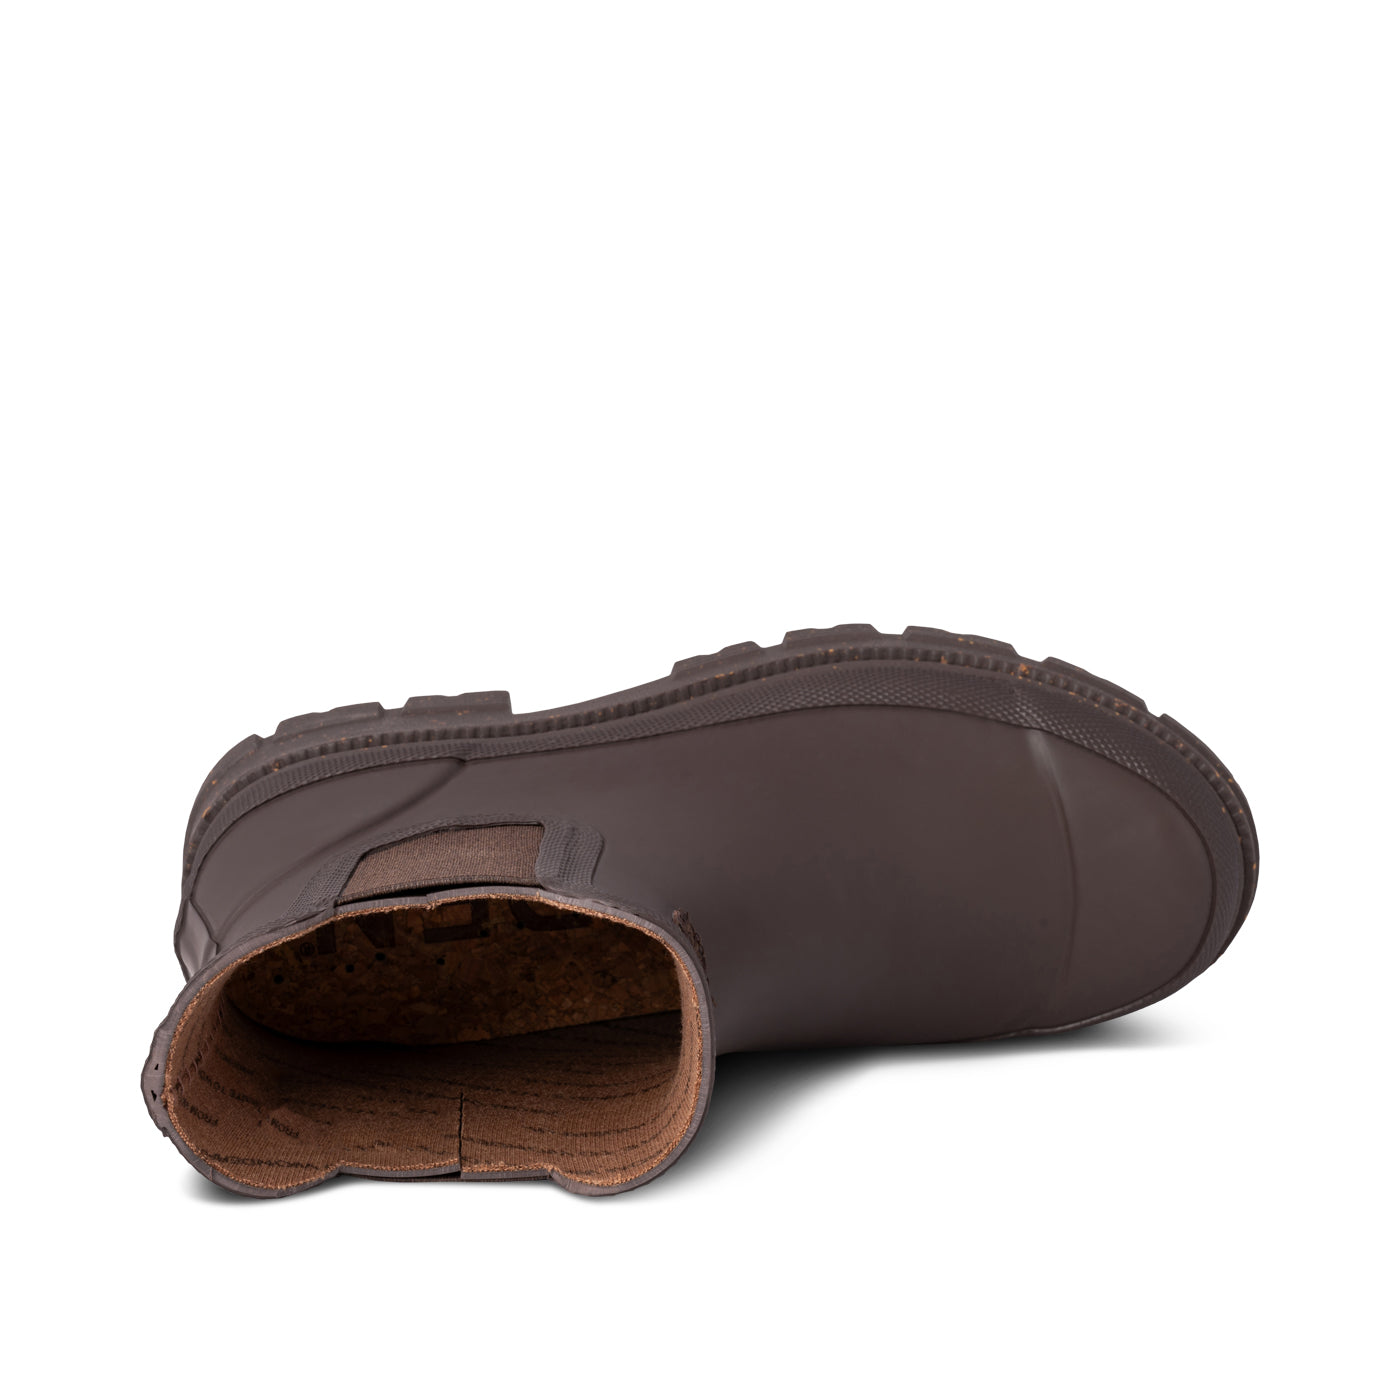 WODEN Liv Waterproof Rubber Boots 063 Chocolate